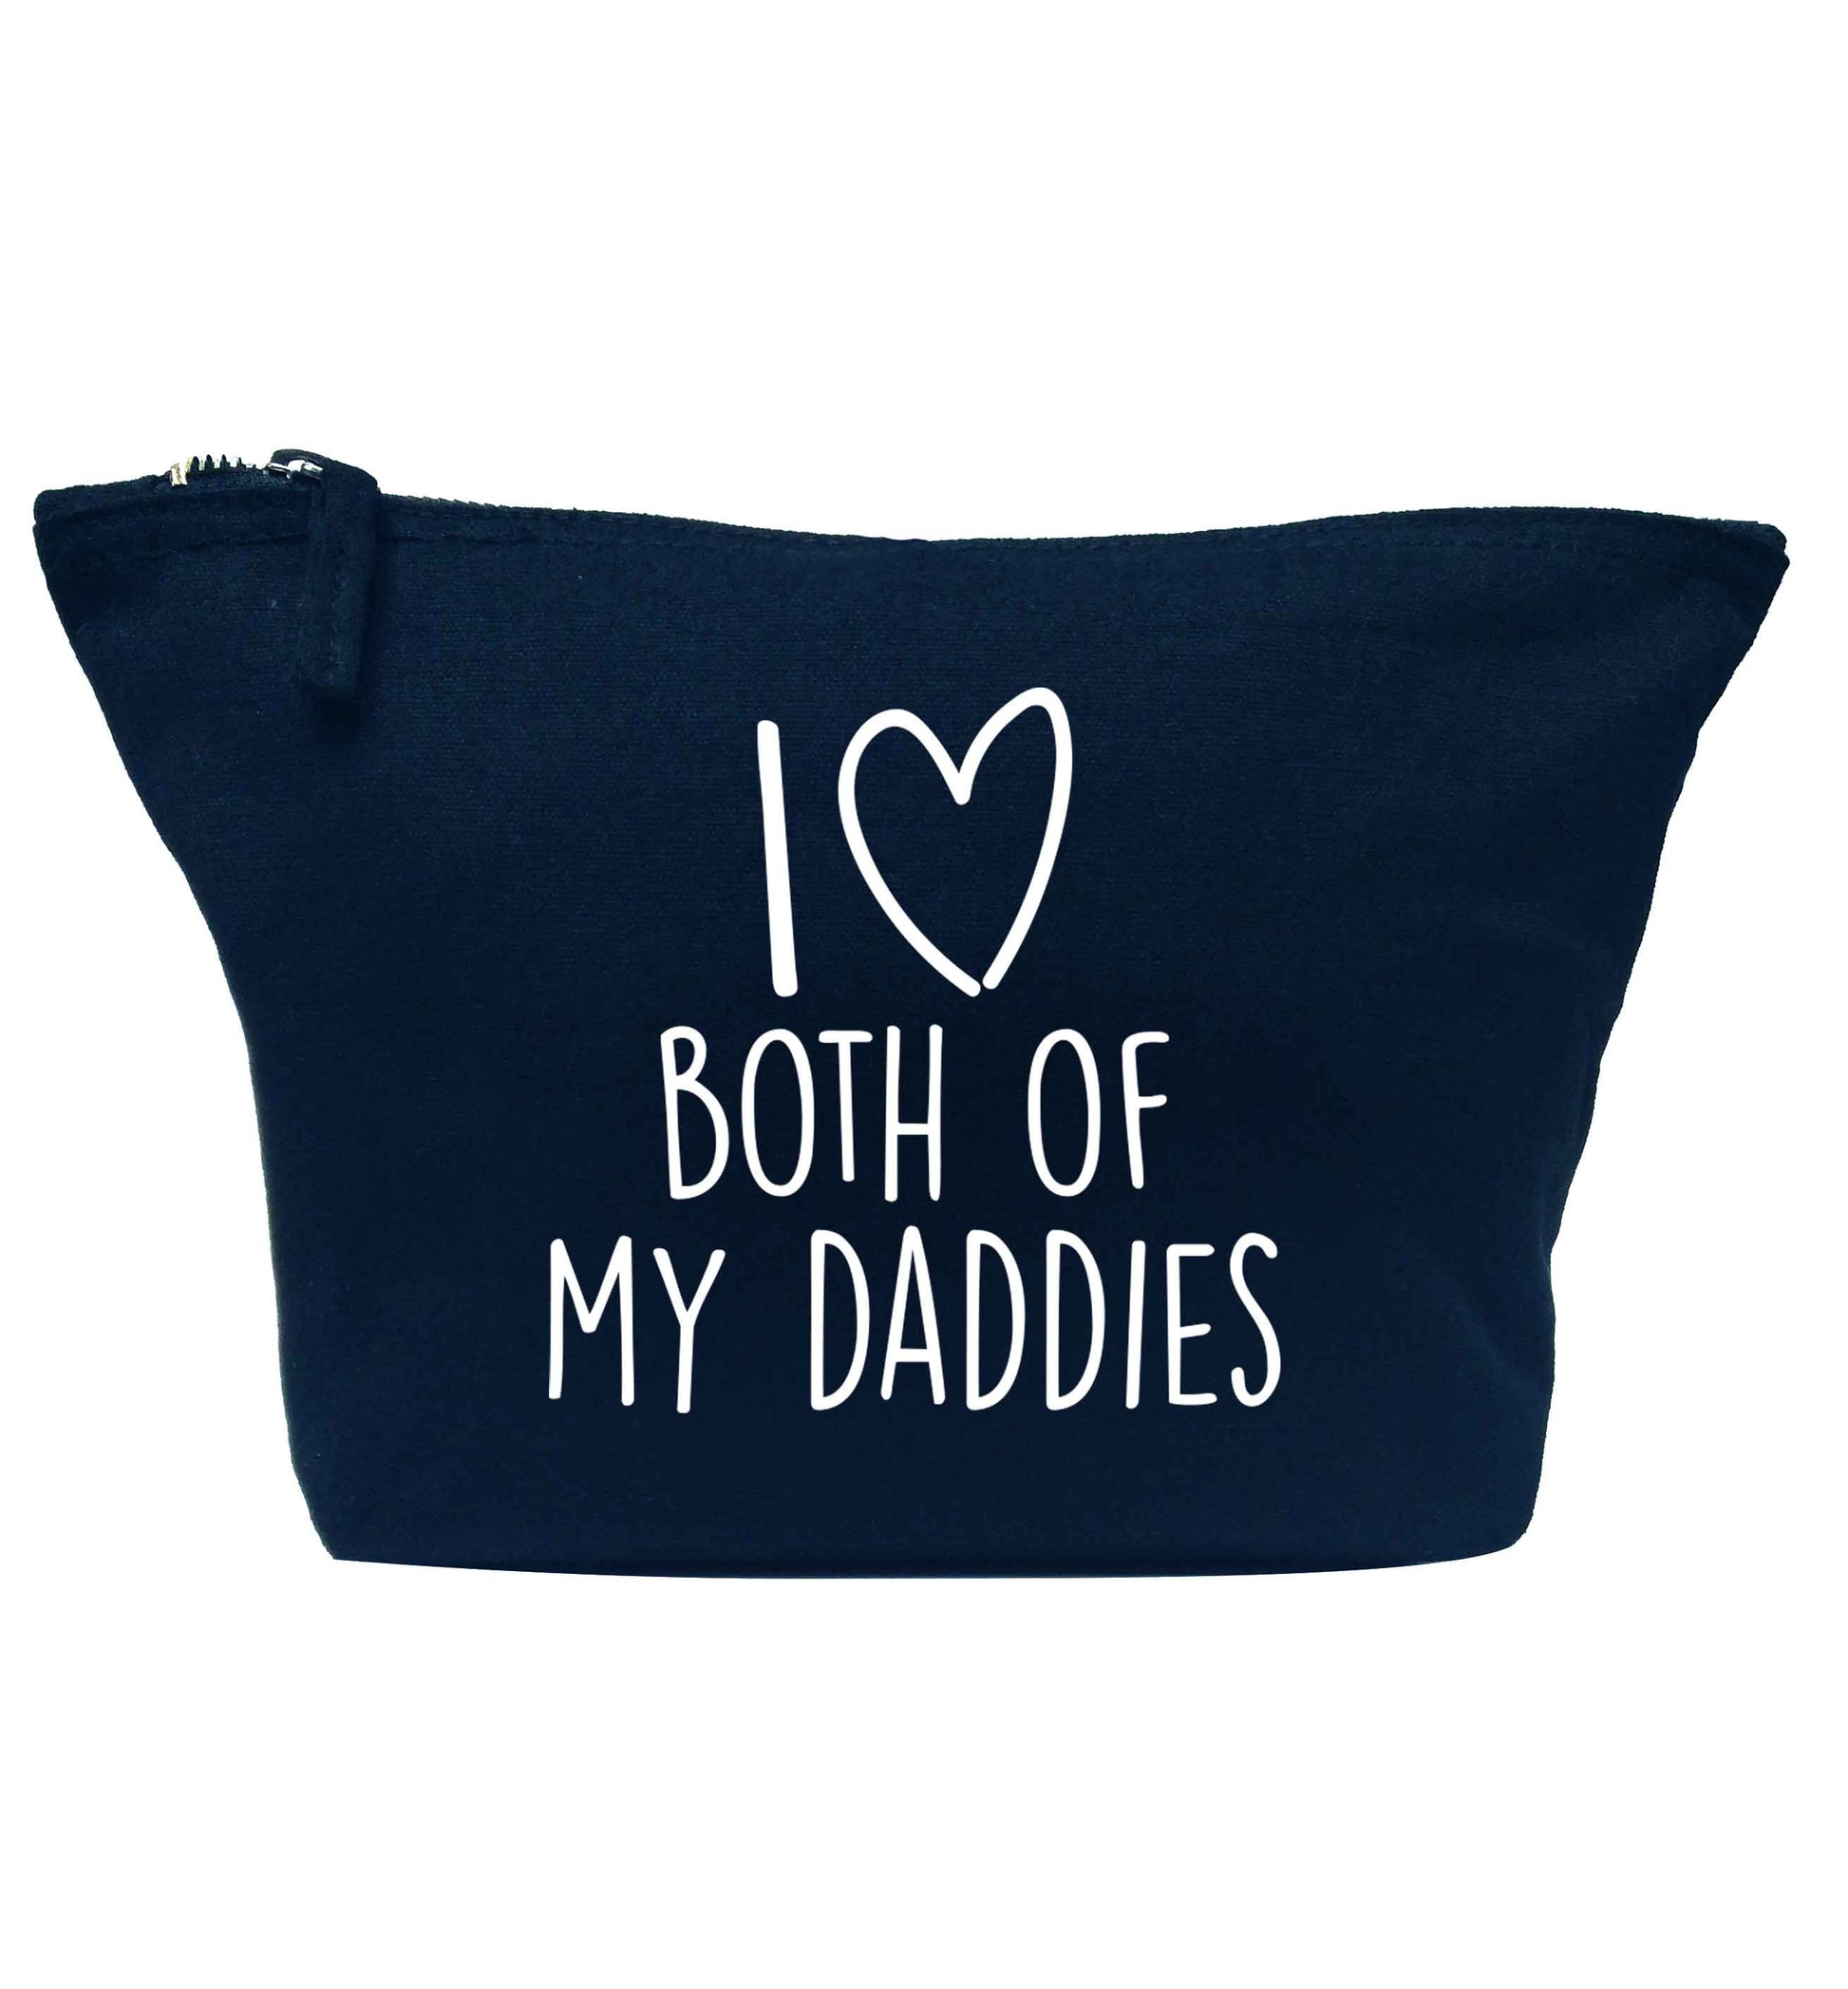 I love both of my daddies navy makeup bag